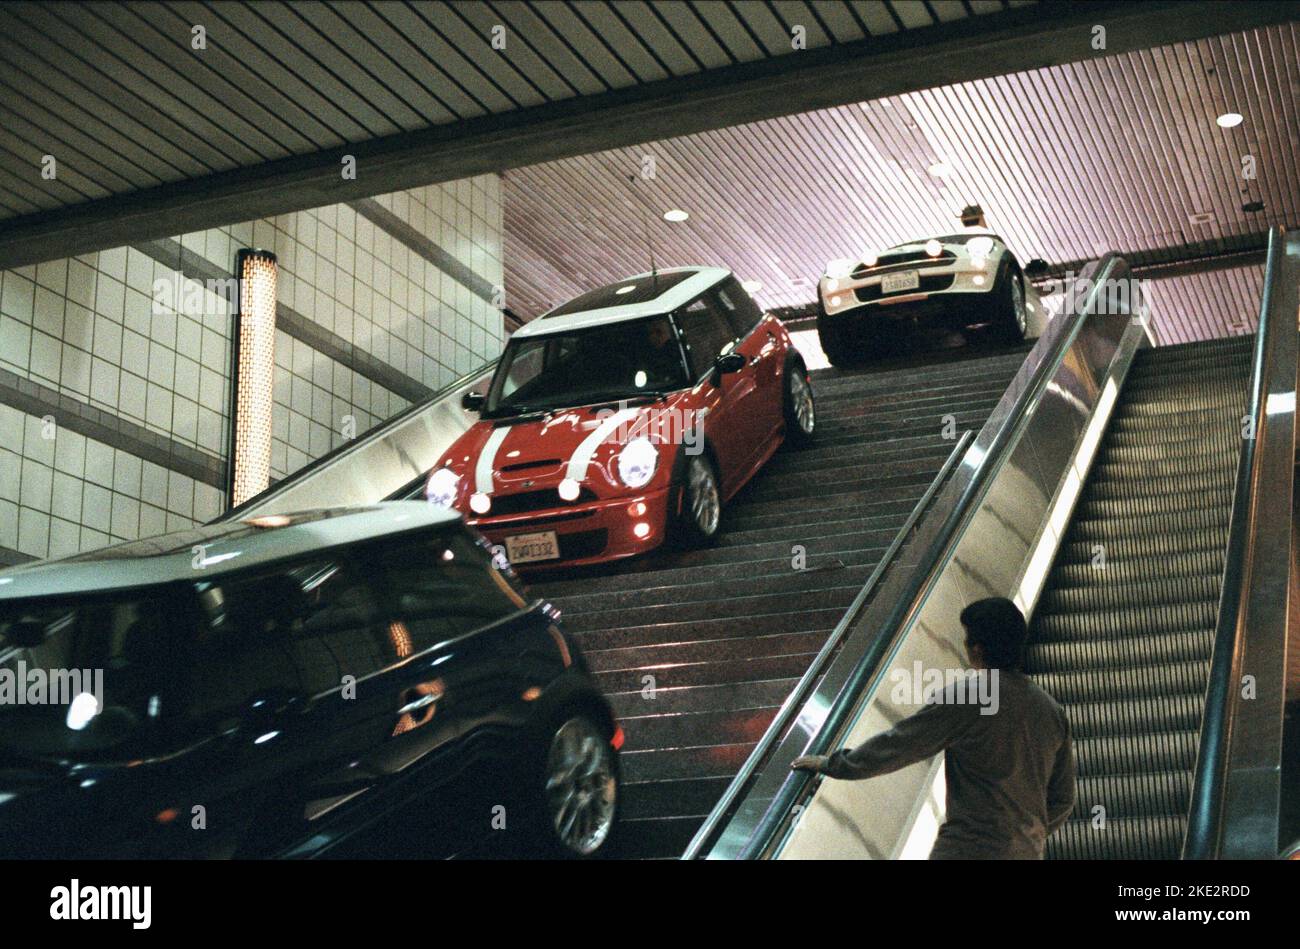 THE ITALIAN JOB, MINI CARS DRIVE DOWN STAIRWAY, 2003 Stock Photo